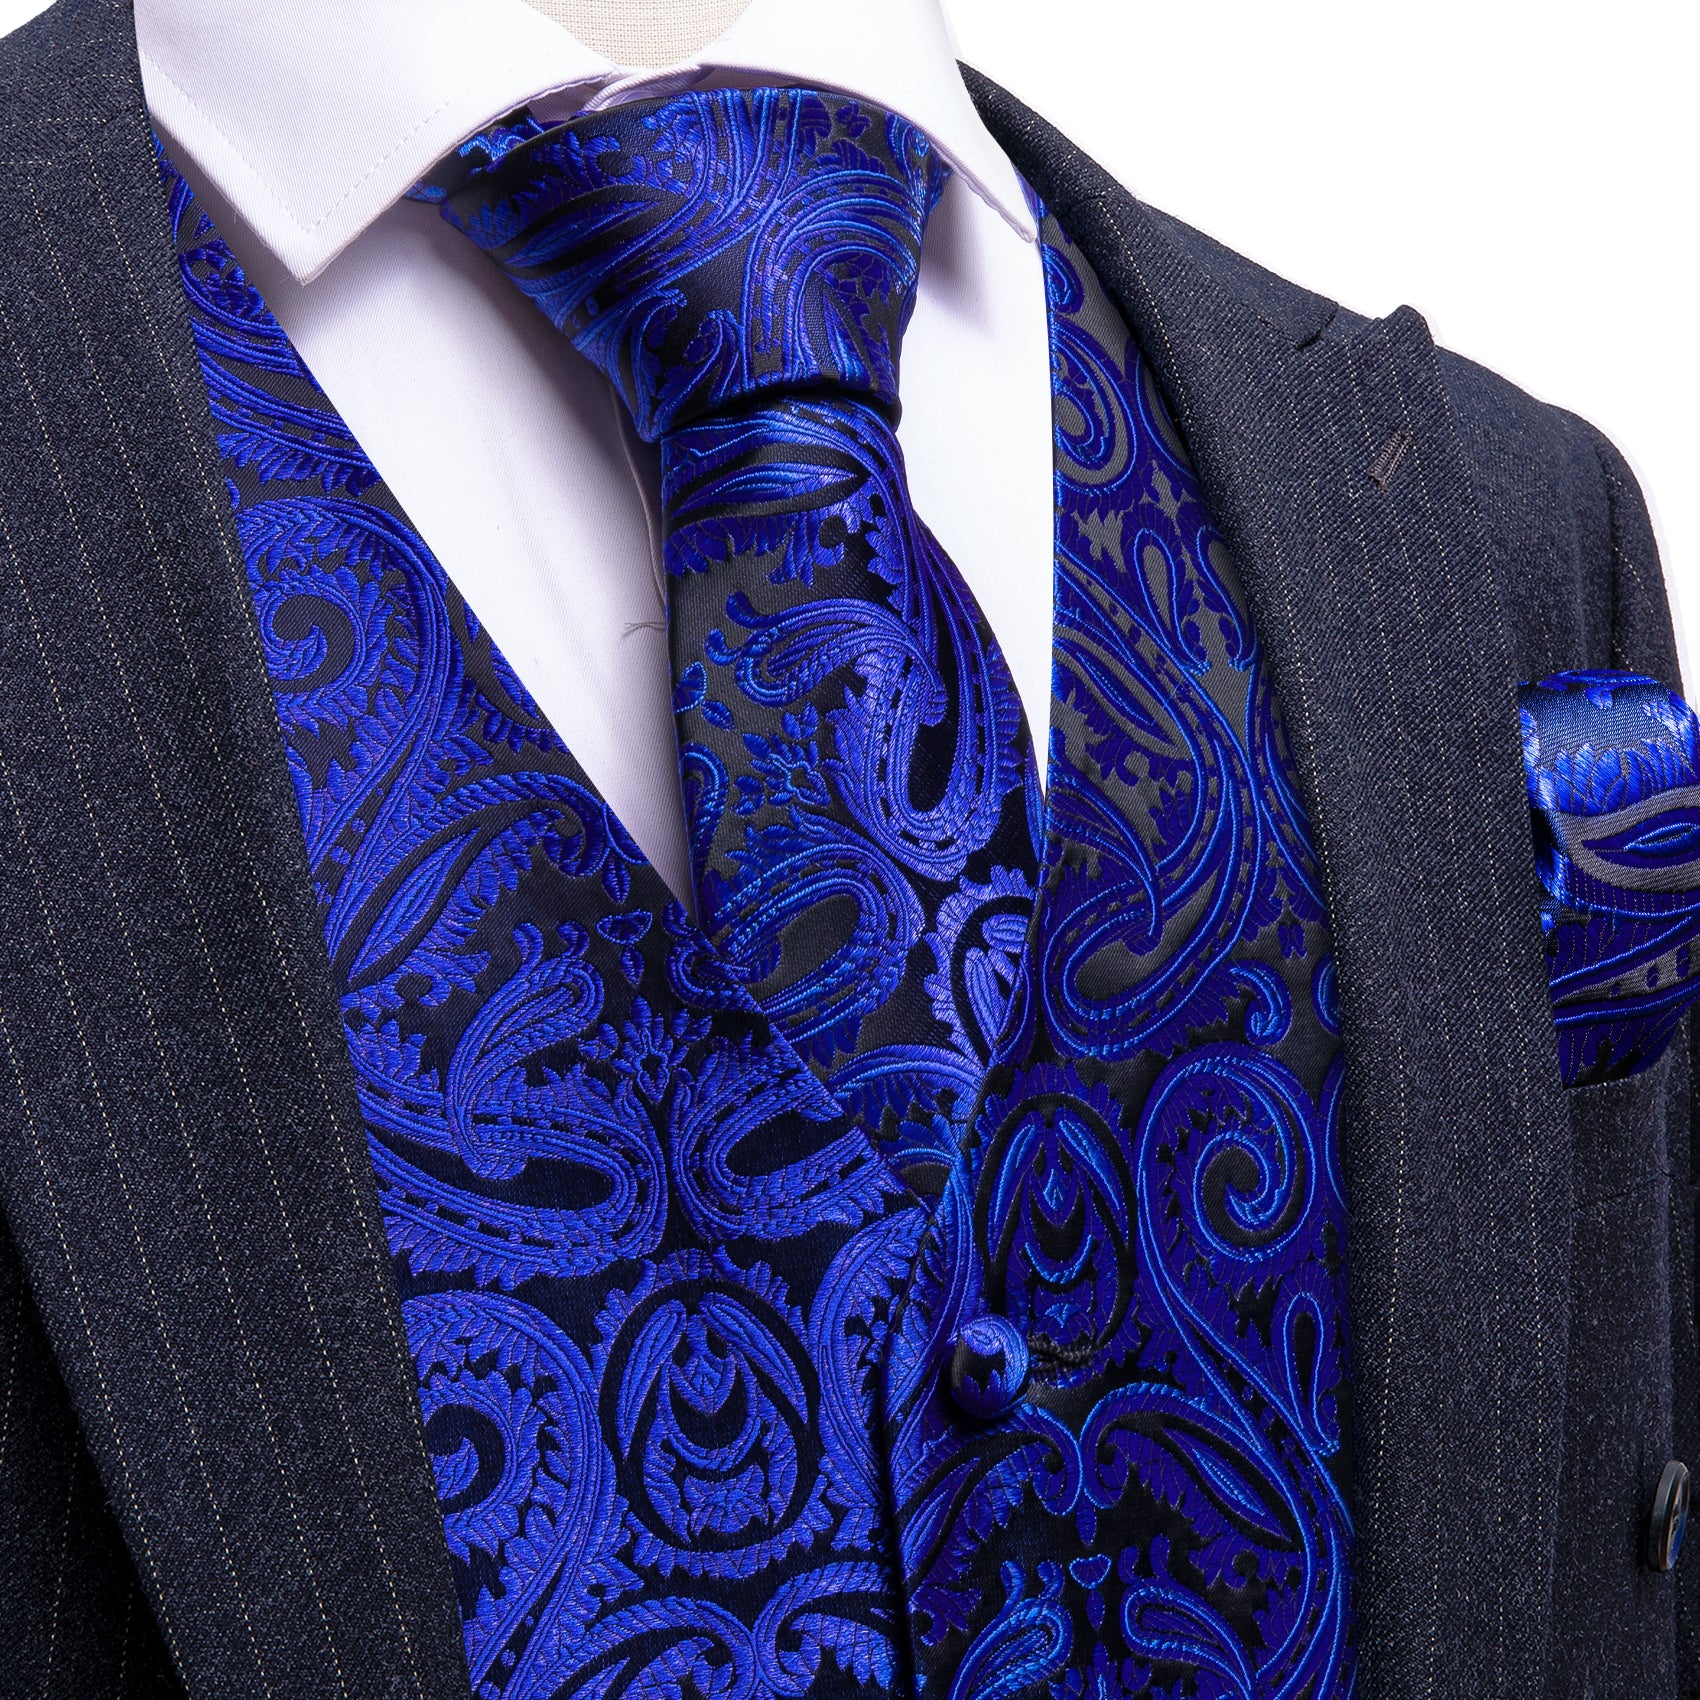 Cobalt Blue Black Paisley Silk Vest Tie Pocket square Cufflinks Set